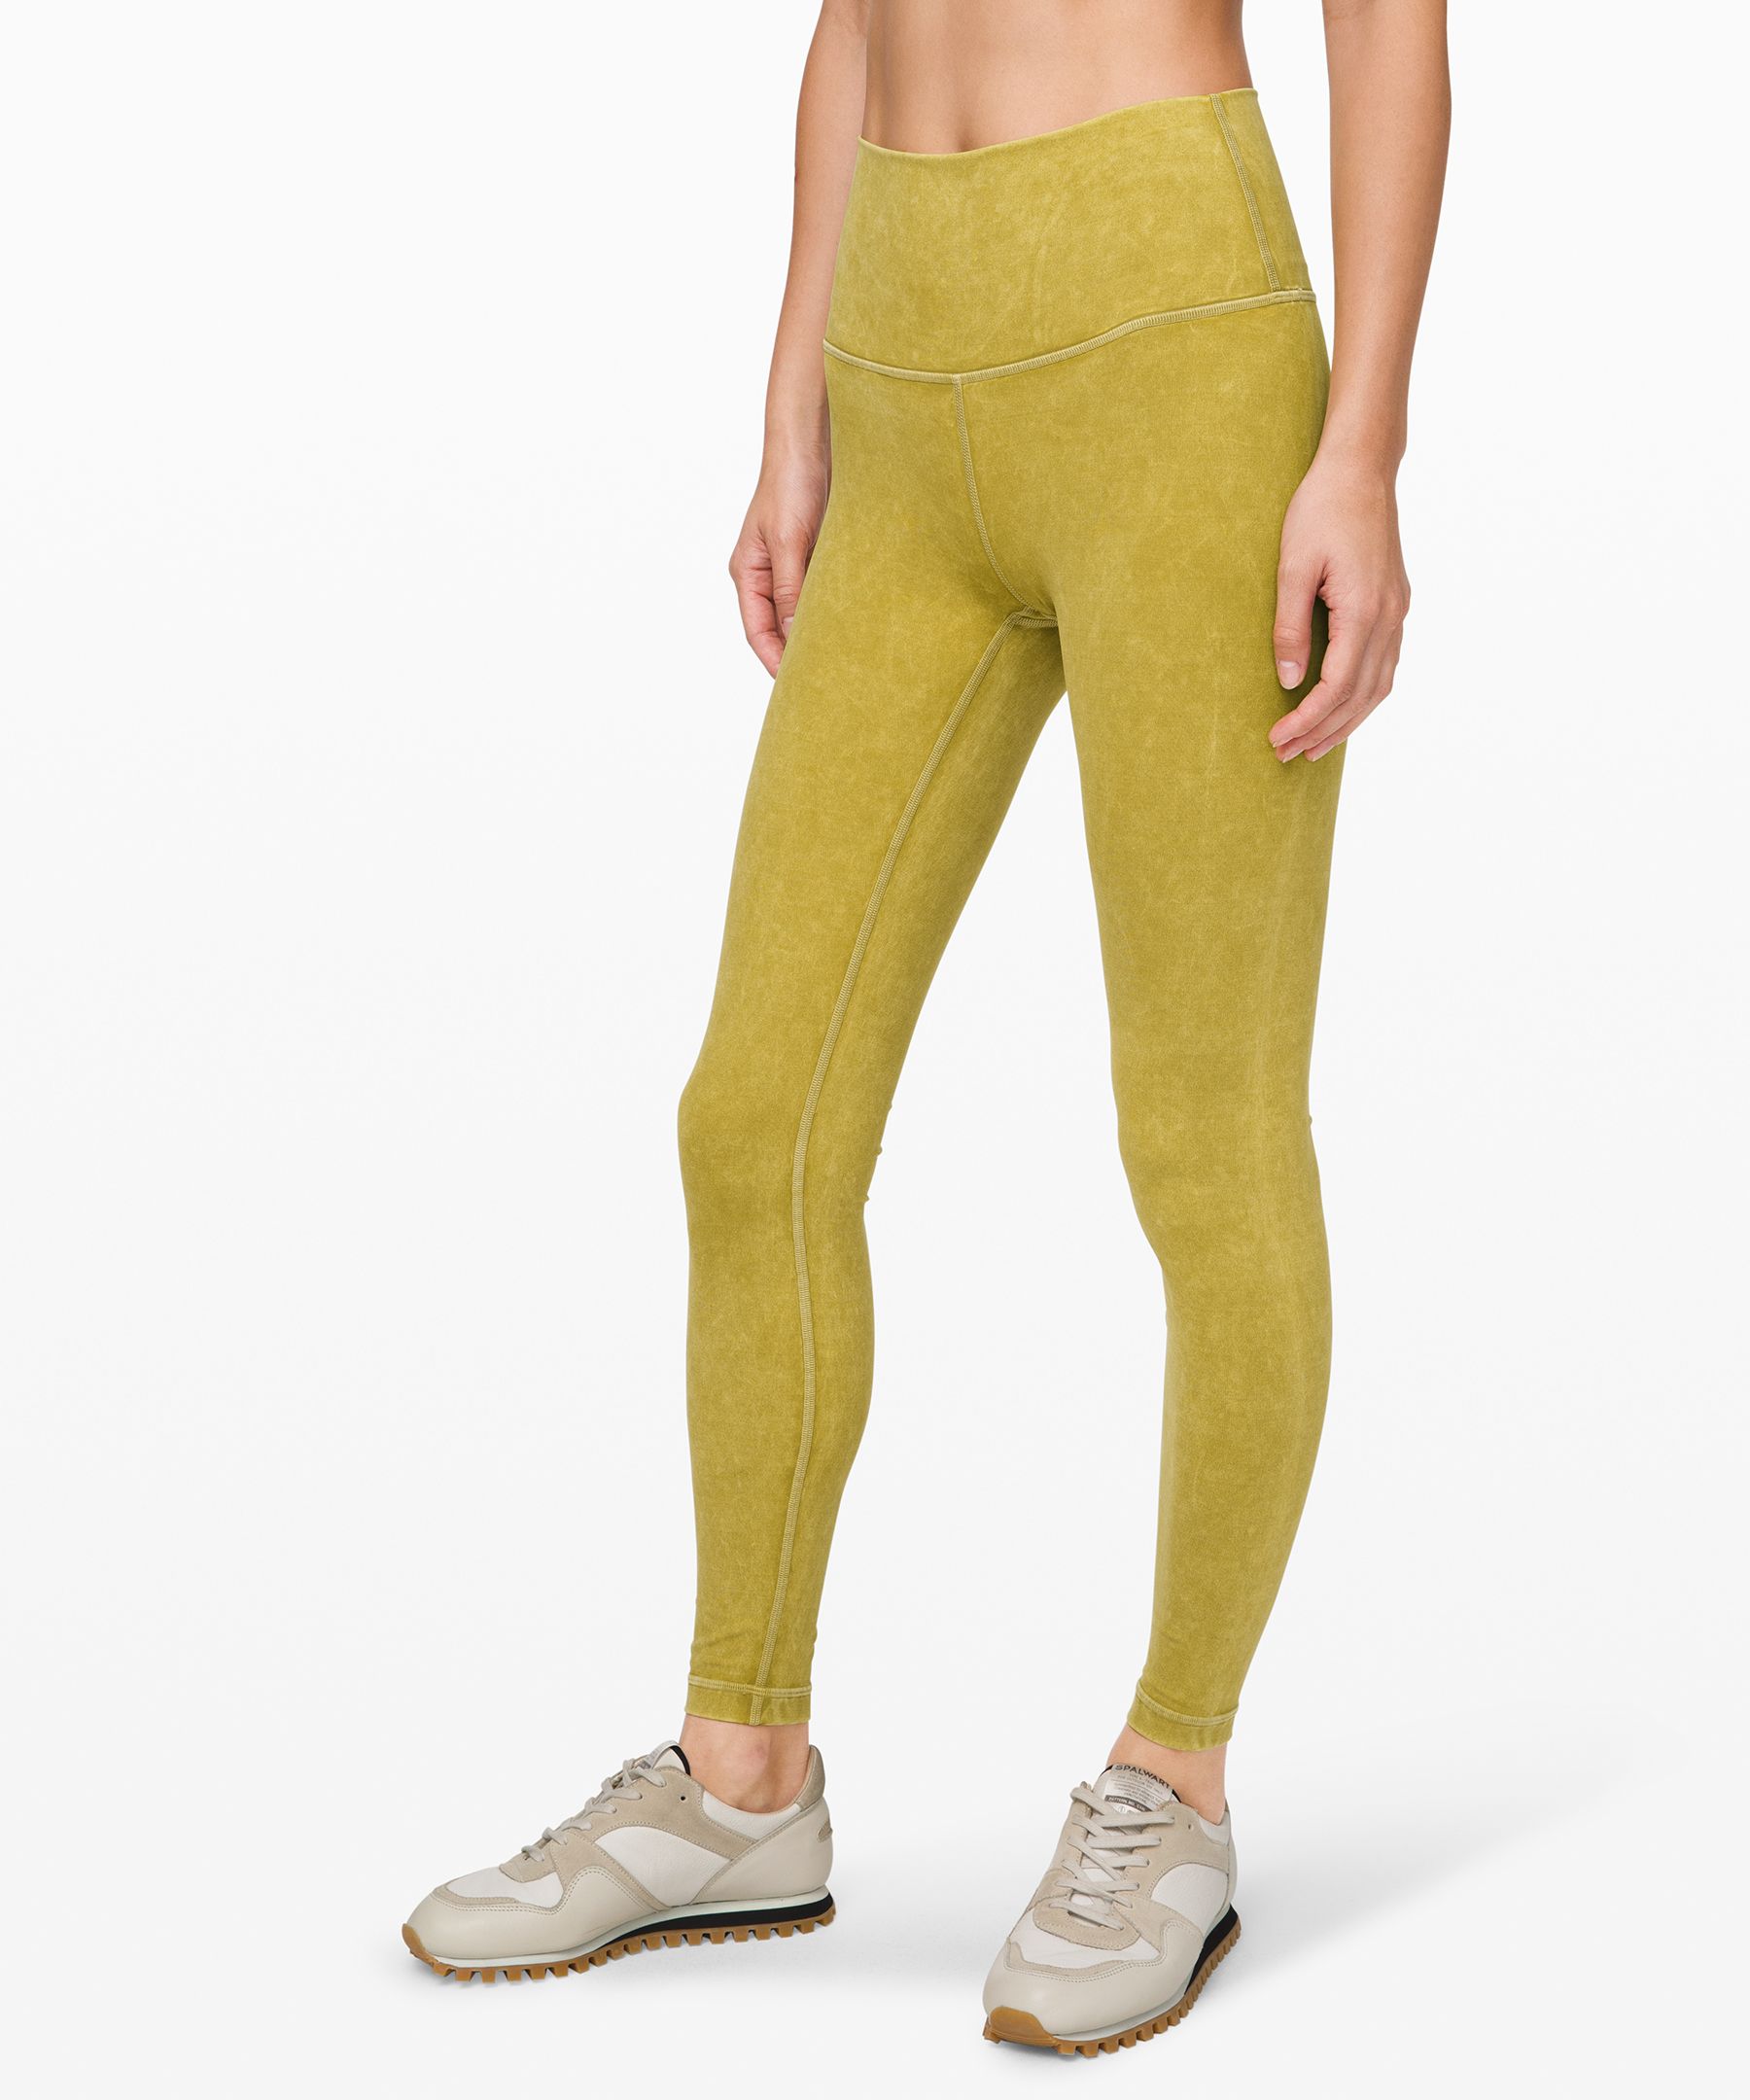 yellow lululemon leggings